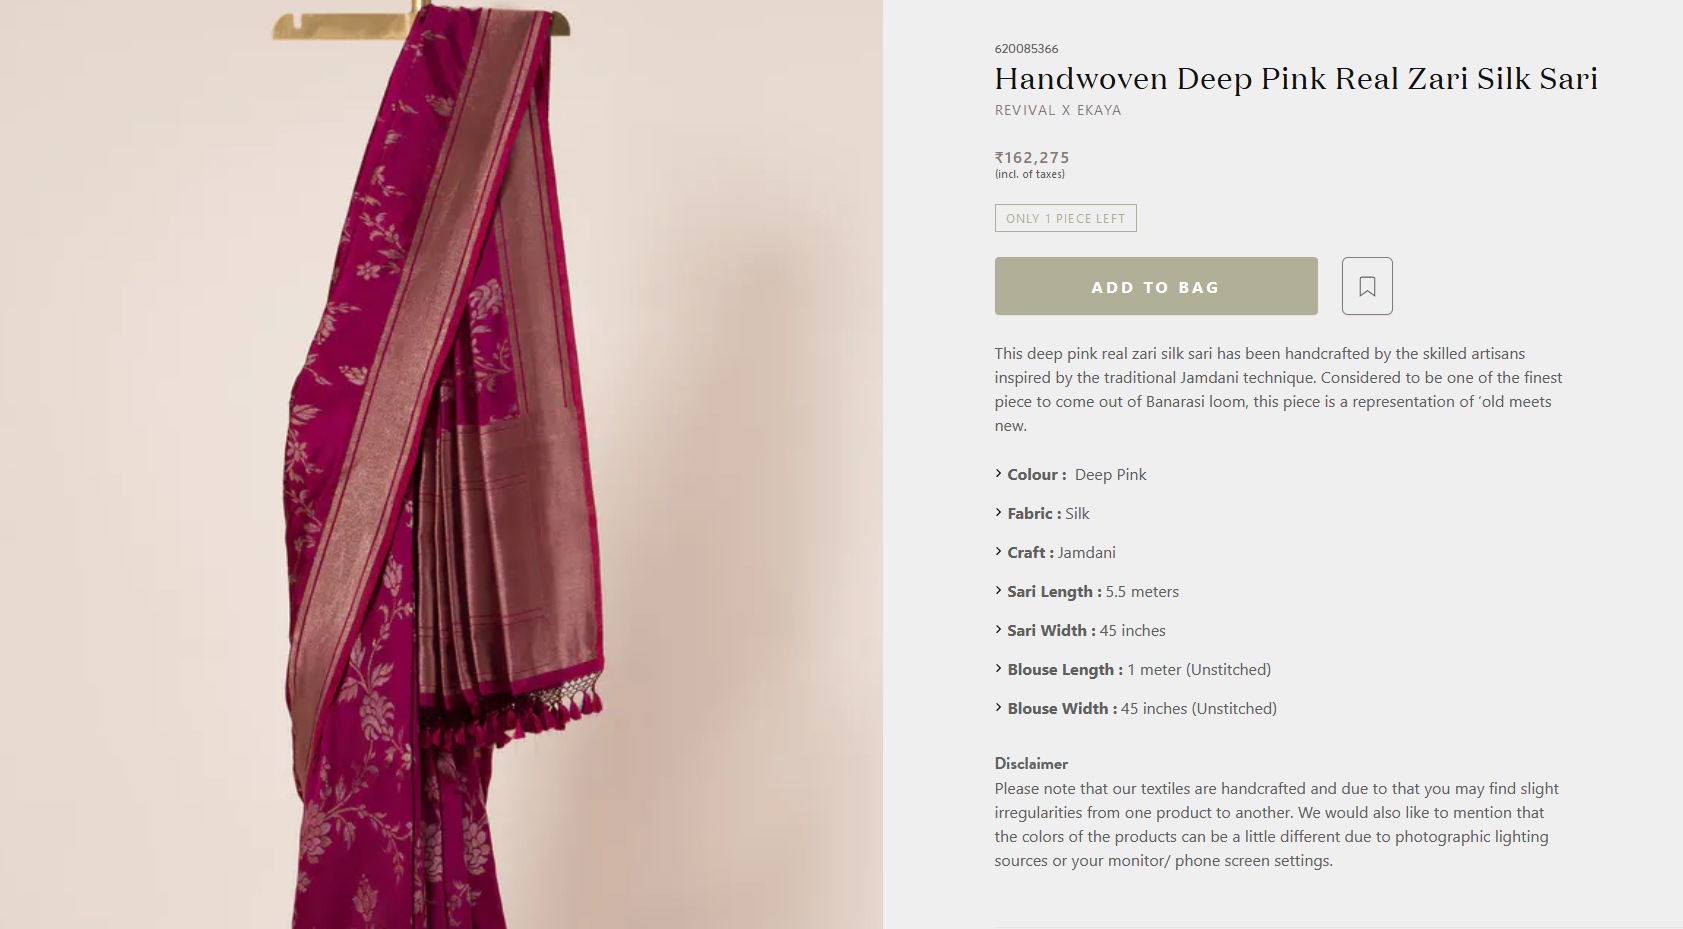 Yami Gautam's handwoven deep pink zari silk sari from Ekaya(ekaya.in)